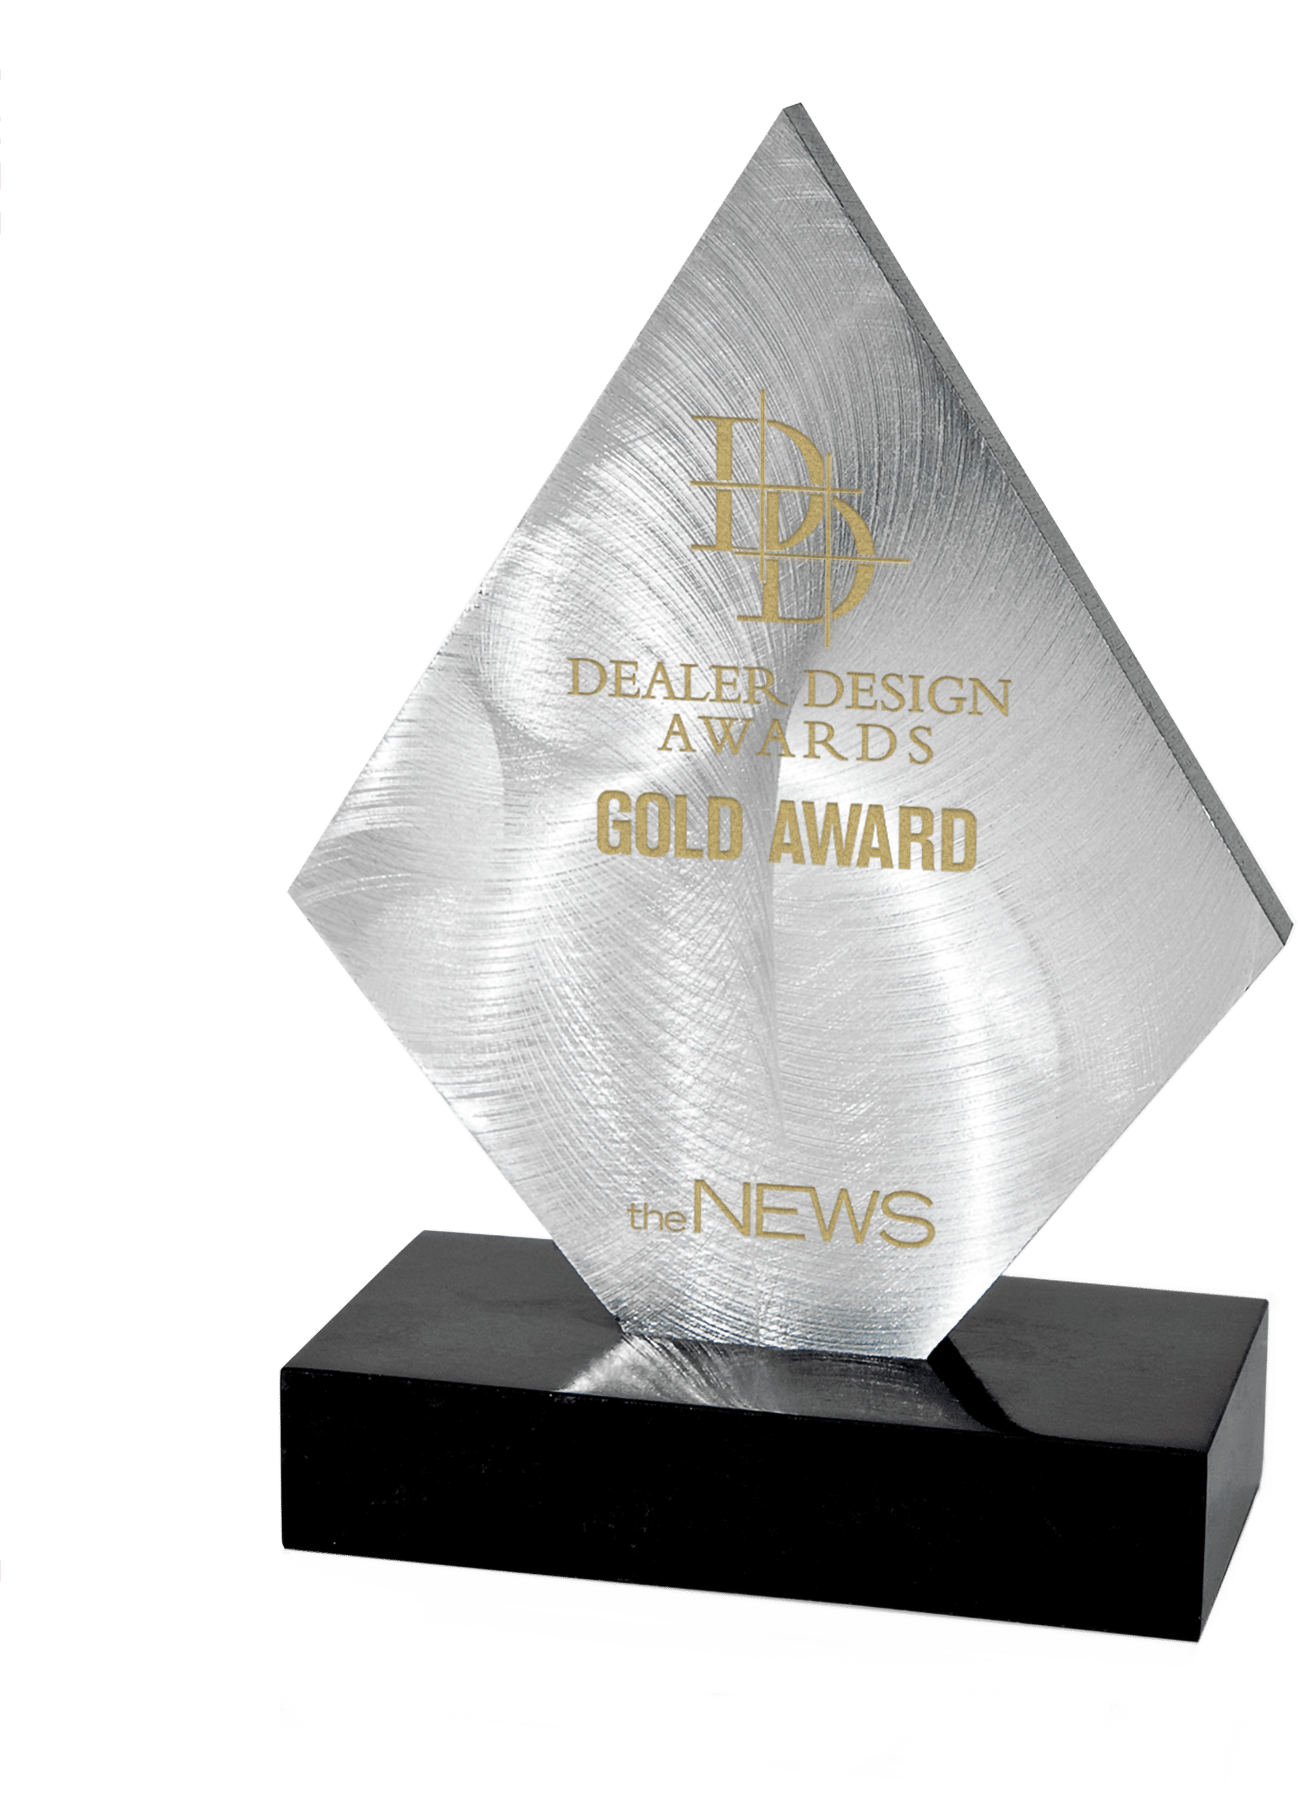 Award sculpture for The NEWS Dealer Design Awards